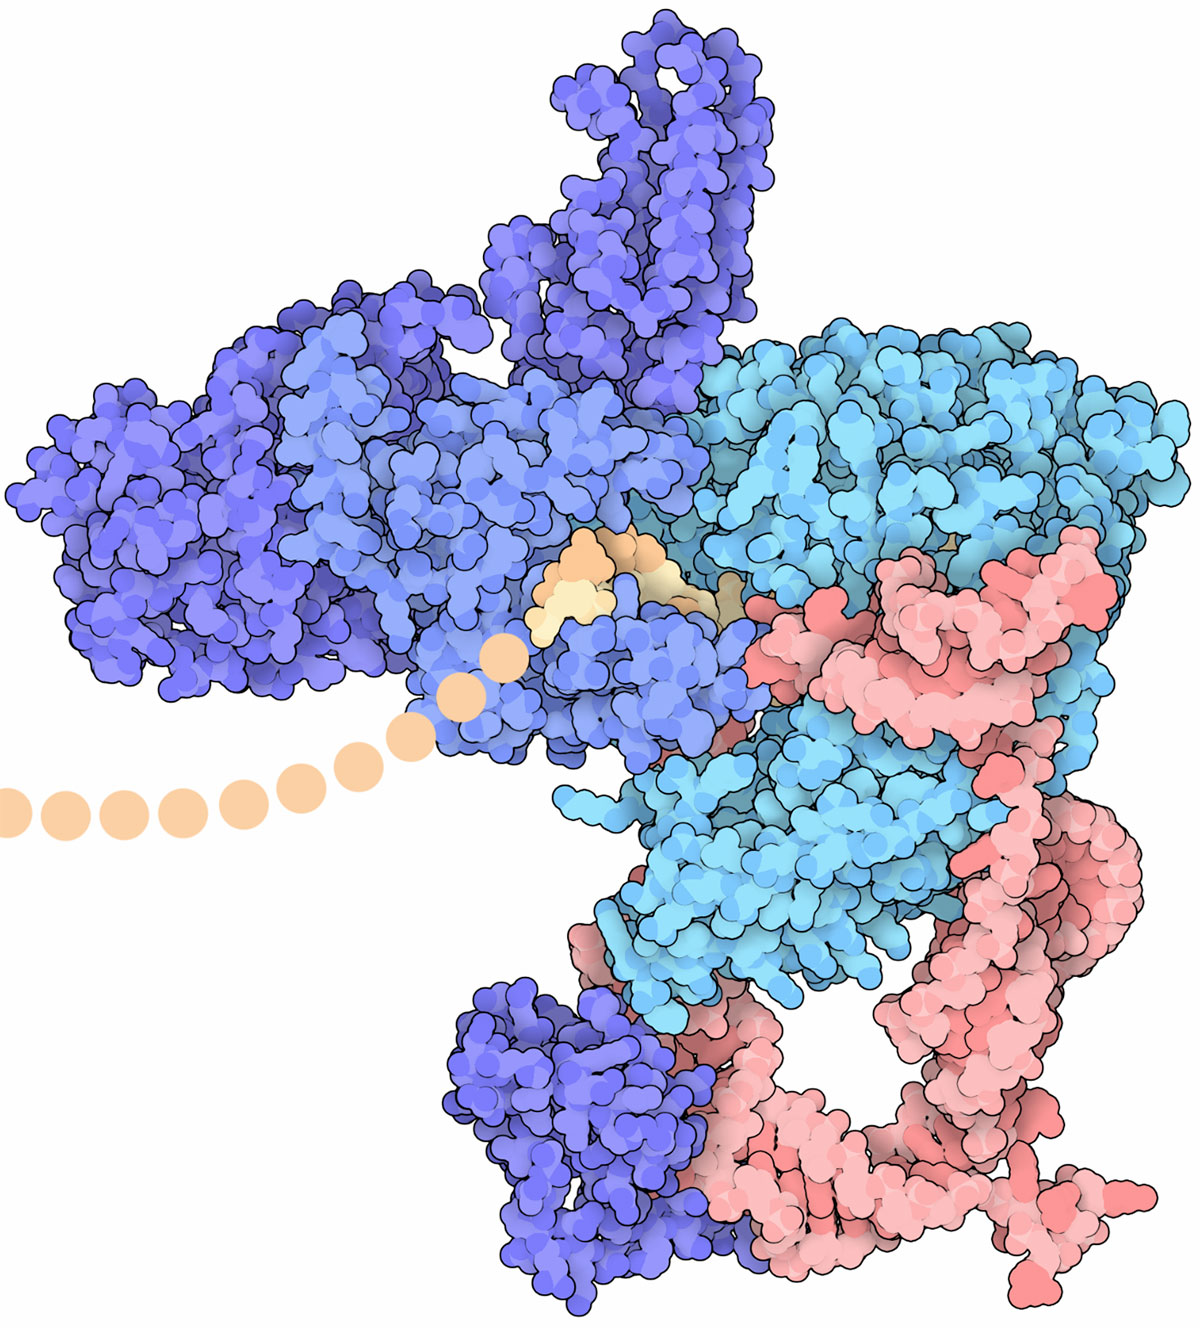 3D molecular model in blue, aqua and pink clusters